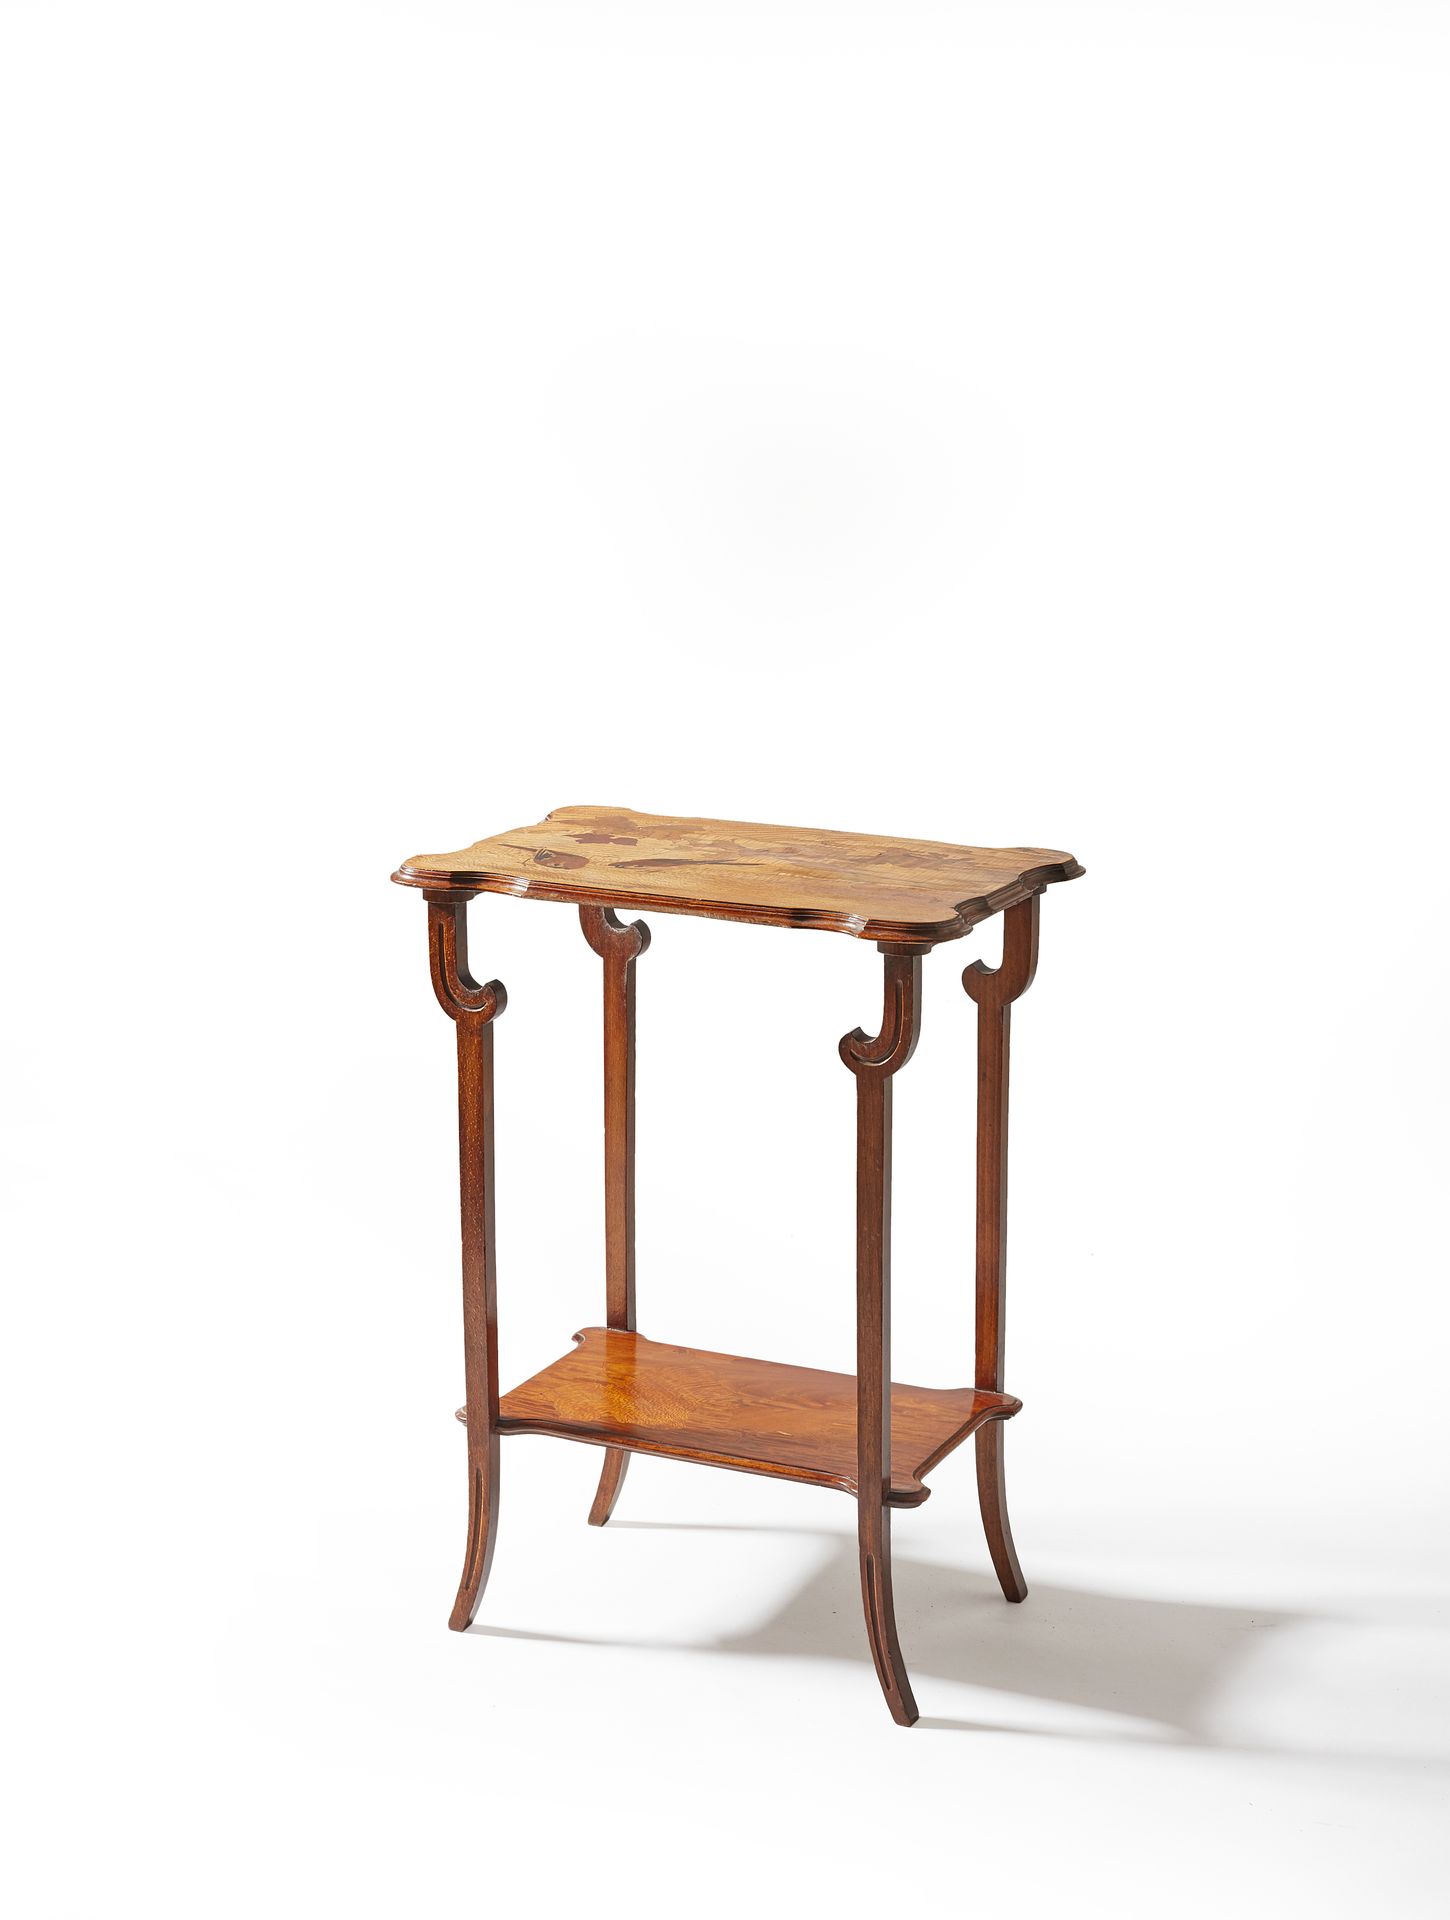 Null Establishment GALLÉ (1904-1936)

Rectangular coffee table, the top in marqu&hellip;